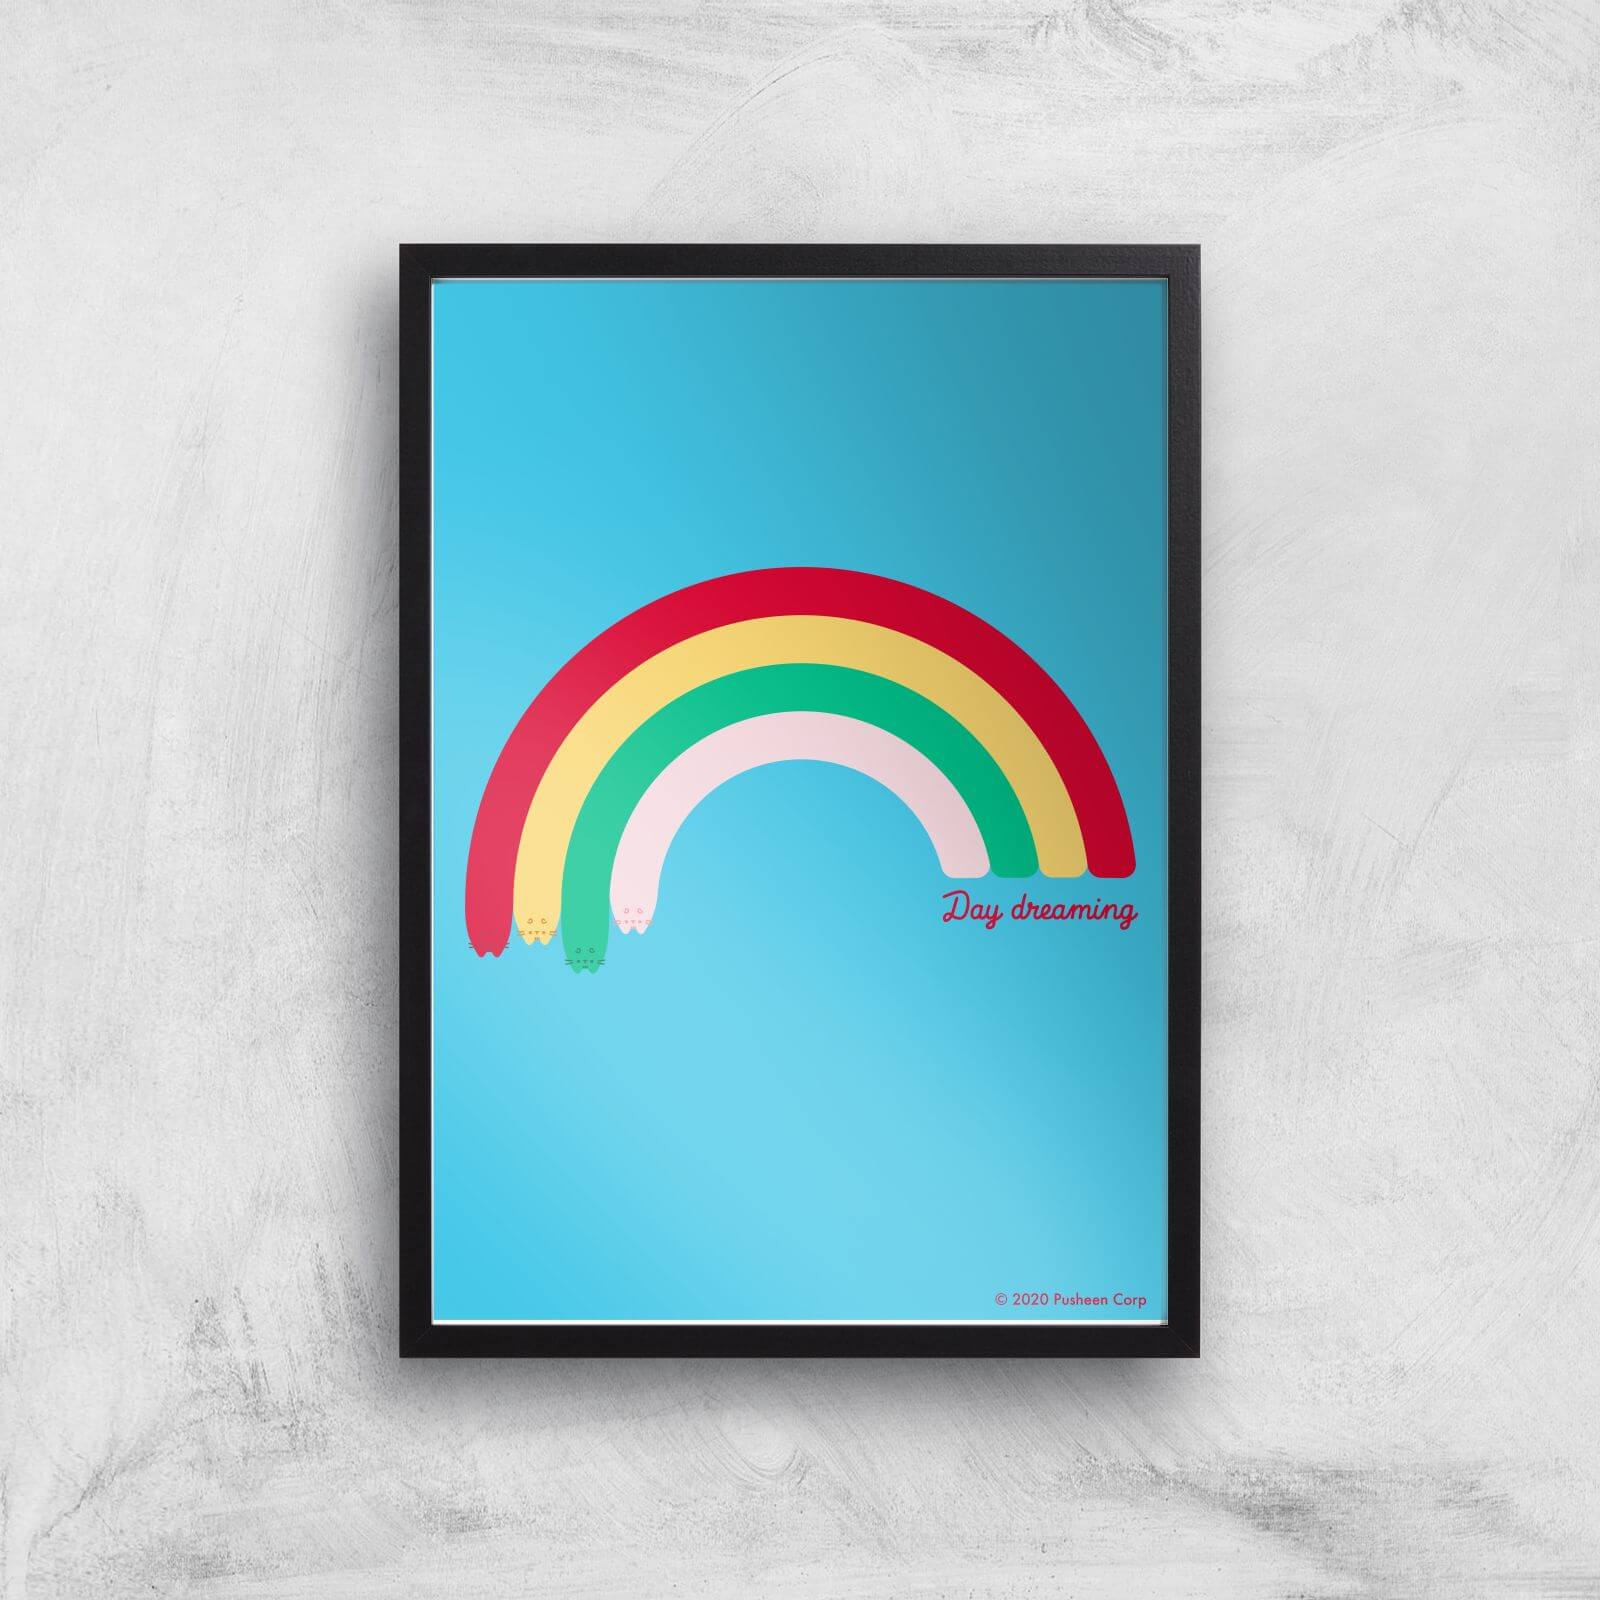 Pusheen Large Rainbow Giclee Art Print - A3 - Black Frame